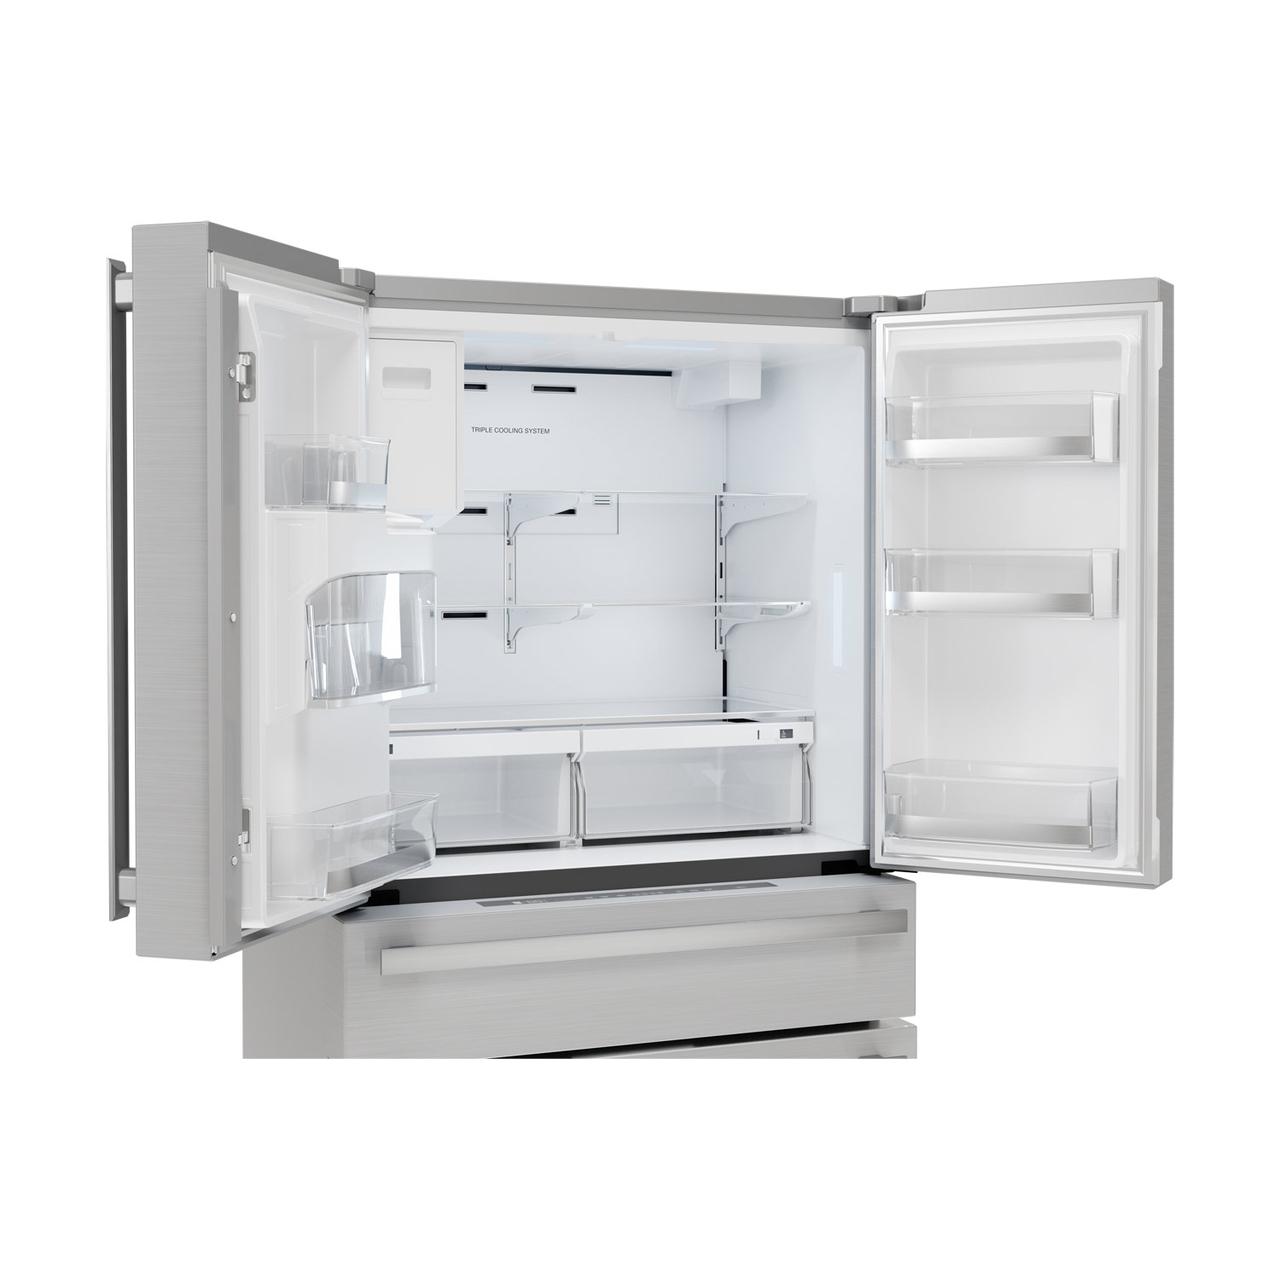 Sharp French 4-Door Counter-Depth Refrigerator with Water Dispenser